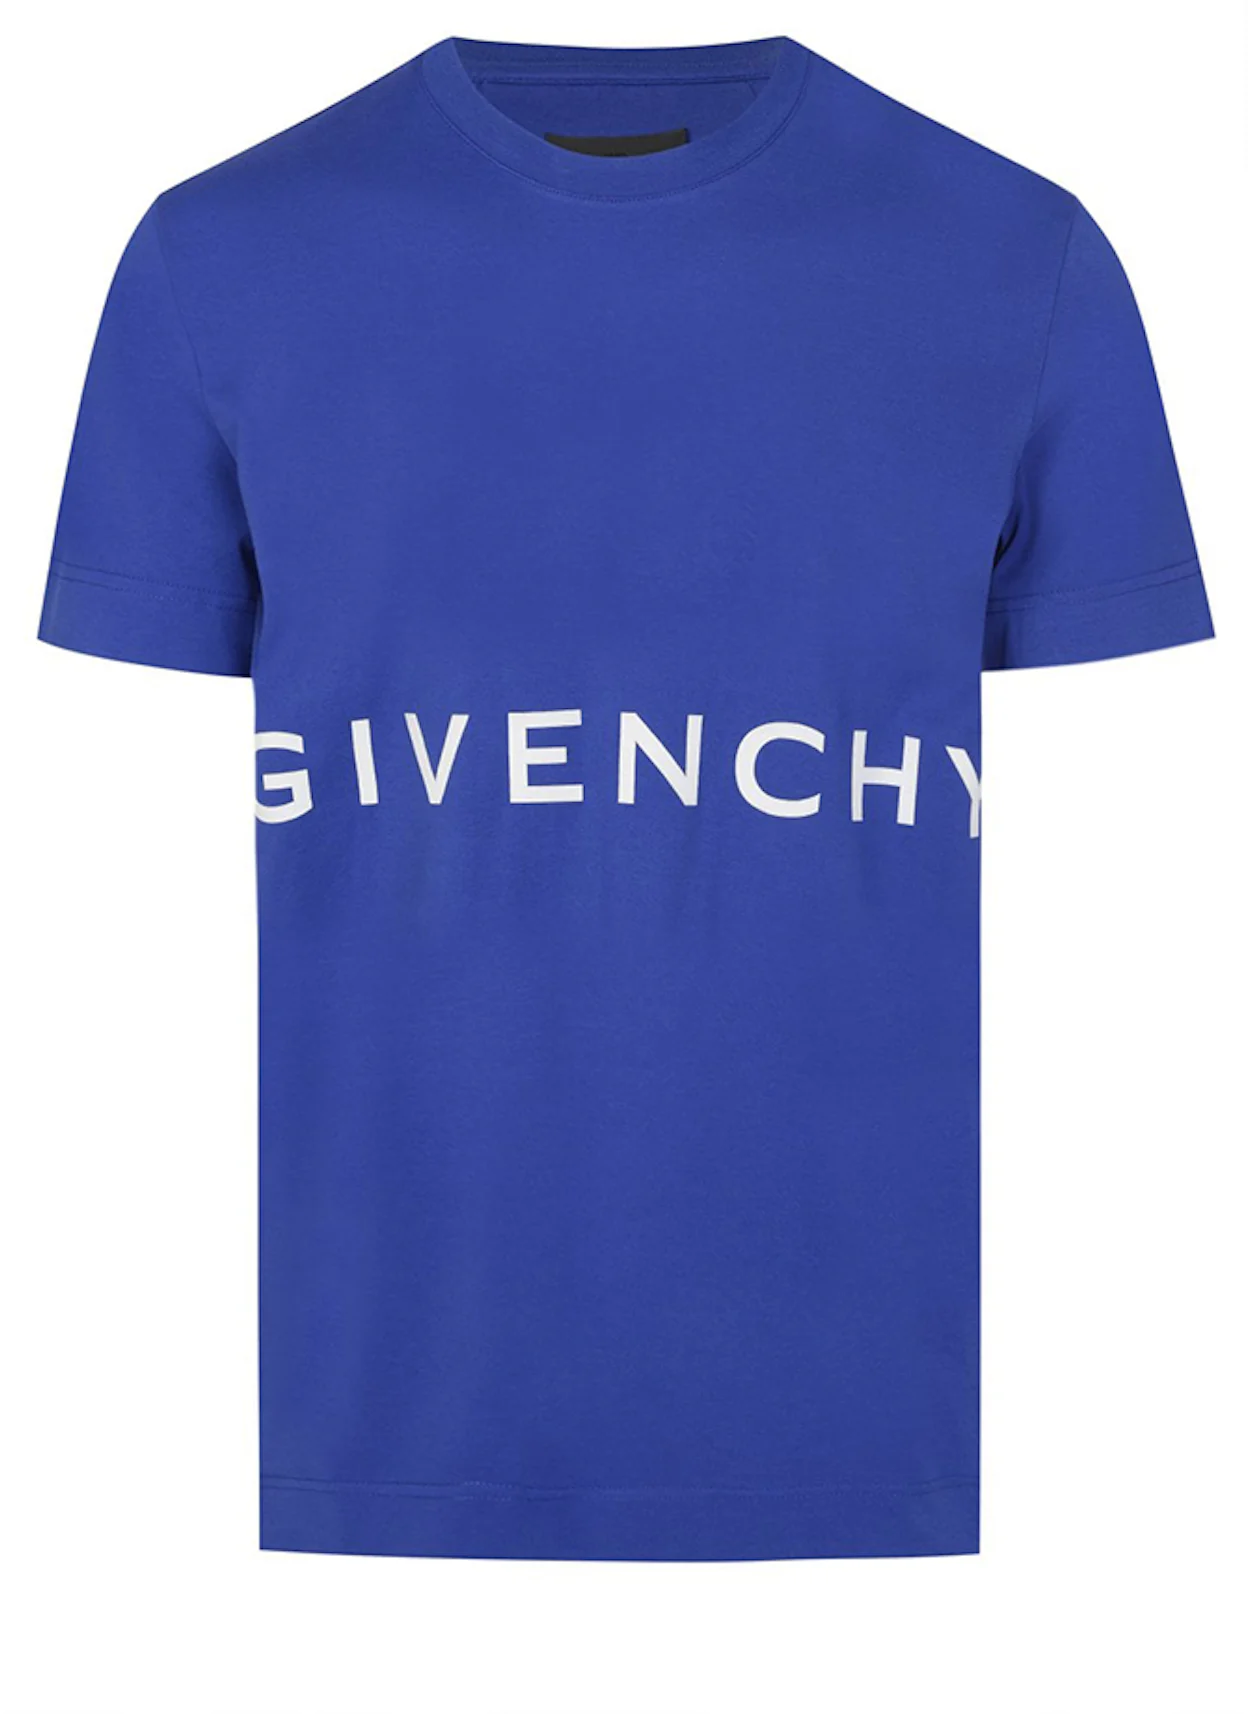 https://images.stockx.com/images/Givenchy-Classic-Fit-Bonded-T-Shirt-Ocean-Blue.jpg?fit=fill&bg=FFFFFF&w=1200&h=857&fm=webp&auto=compress&dpr=2&trim=color&updated_at=1677701398&q=60